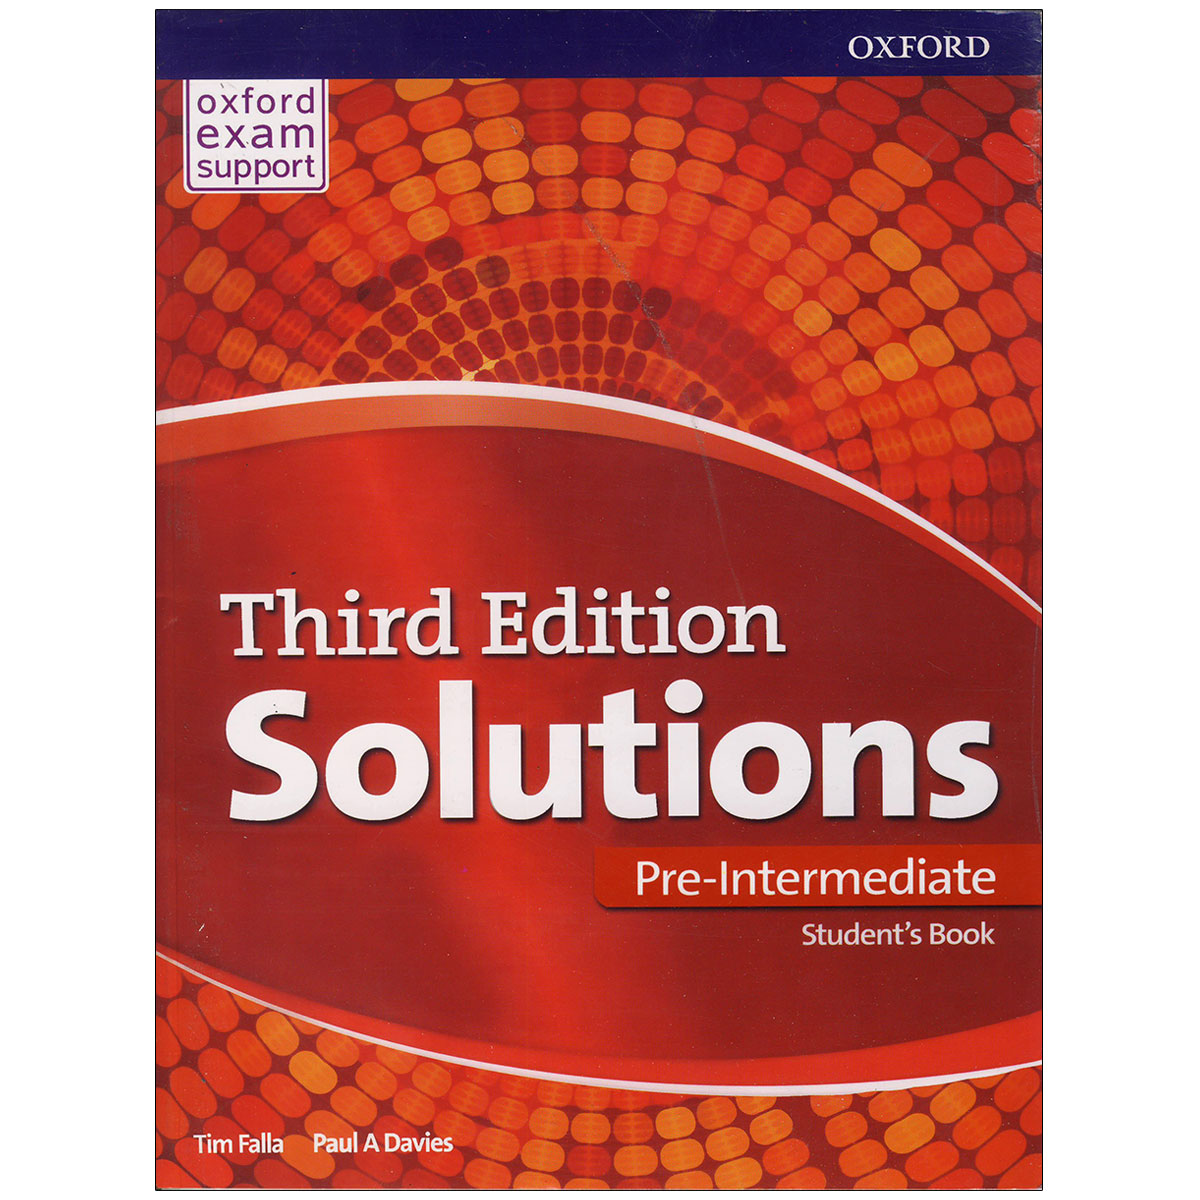 Solutions elementary. Solutions pre-Intermediate 3rd. Third Edition solutions Workbook Oxford. Солюшенс пре интермедиат 3 издание. Pre-Intermediate Intermediate b1.